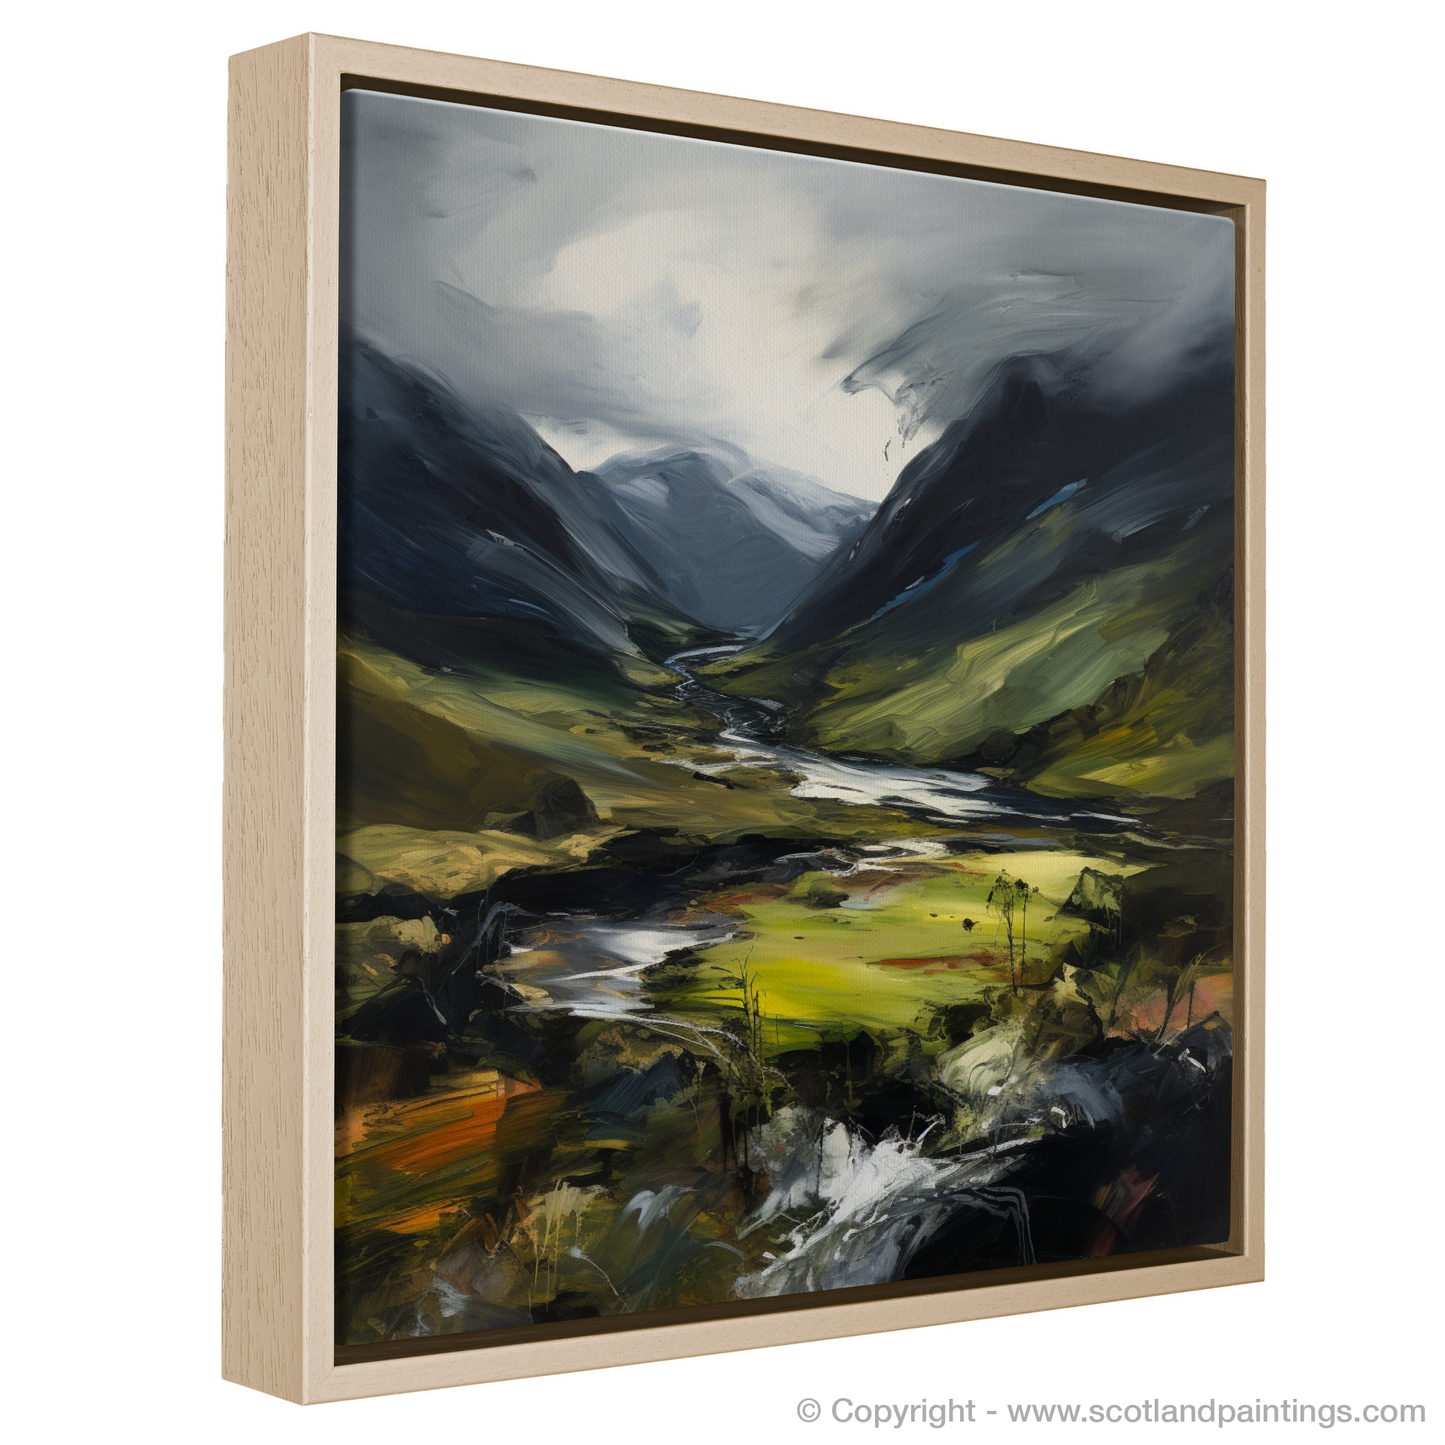 Painting and Art Print of Glen Strathfarrar, Highlands entitled "Highland Tempest: The Enigmatic Glen Strathfarrar".